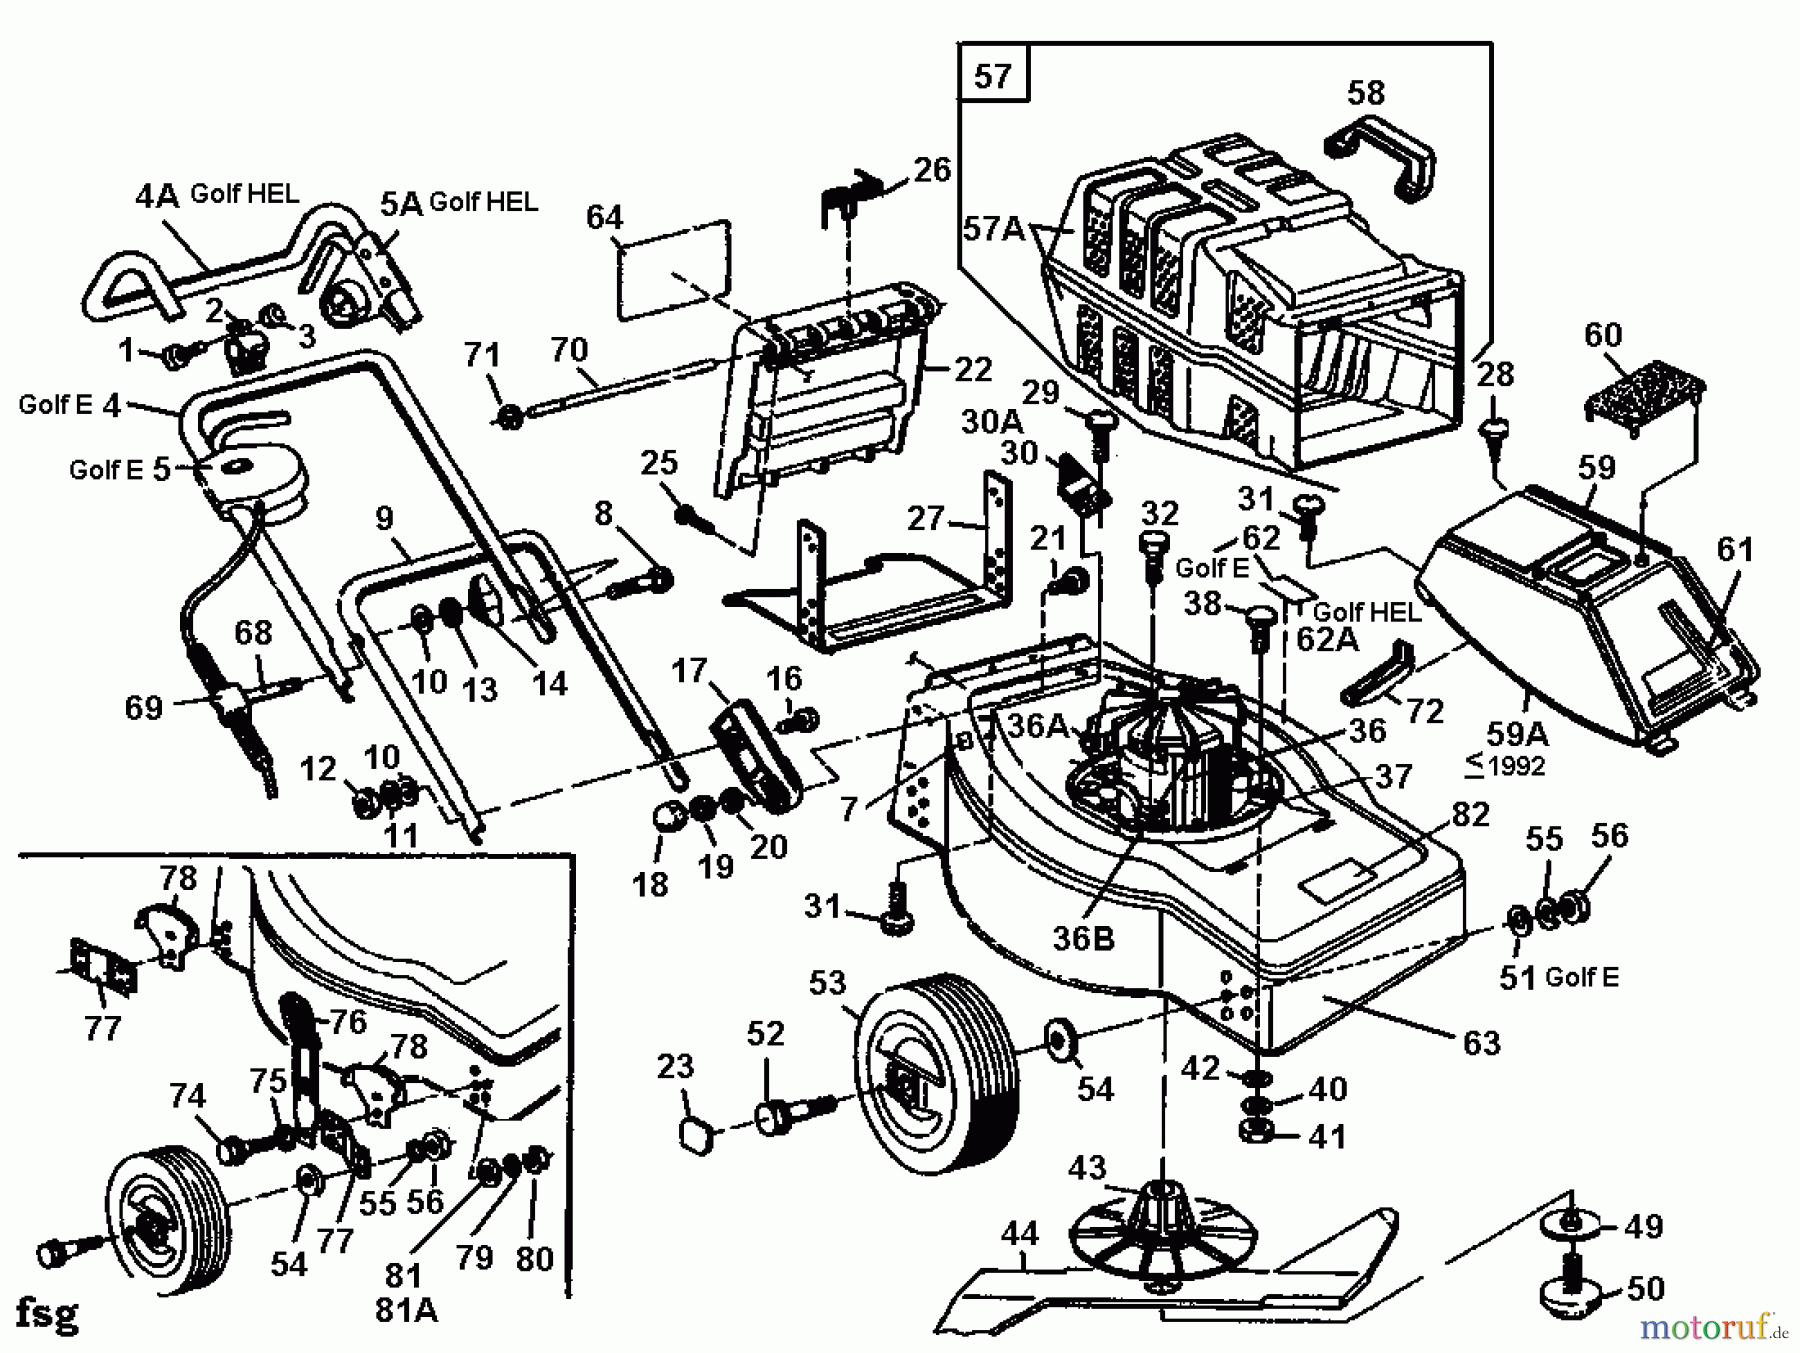  Golf Electric mower HEL 02881.07  (1993) Basic machine